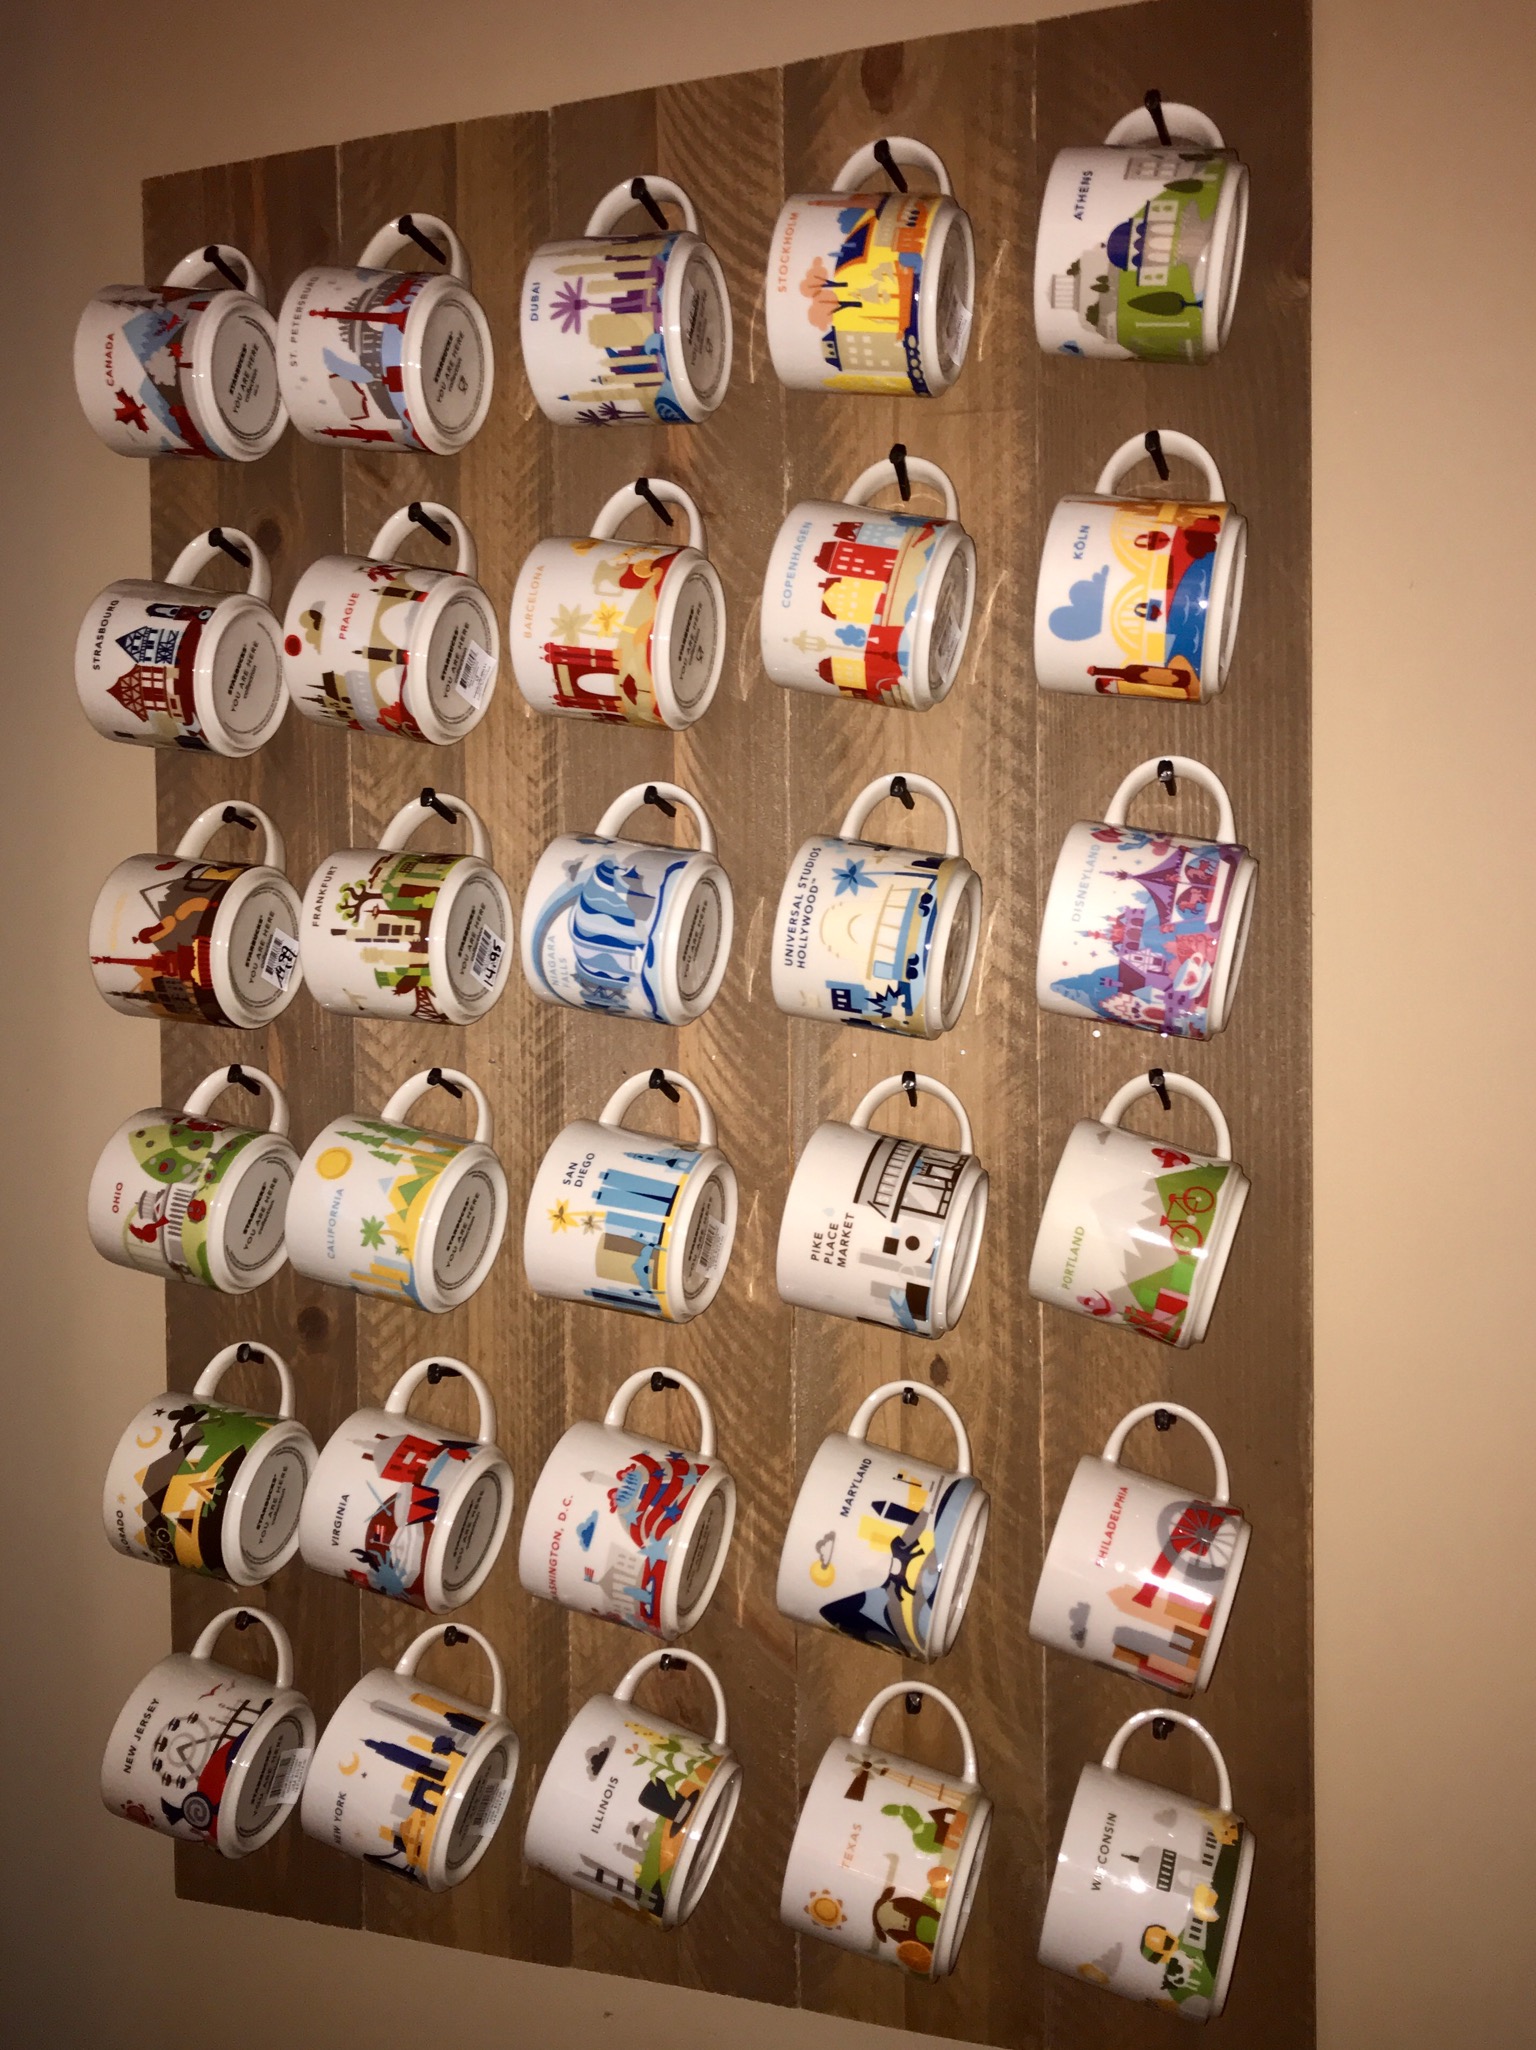 DIY Coffee Mug Holder Wall Mounted Rack 